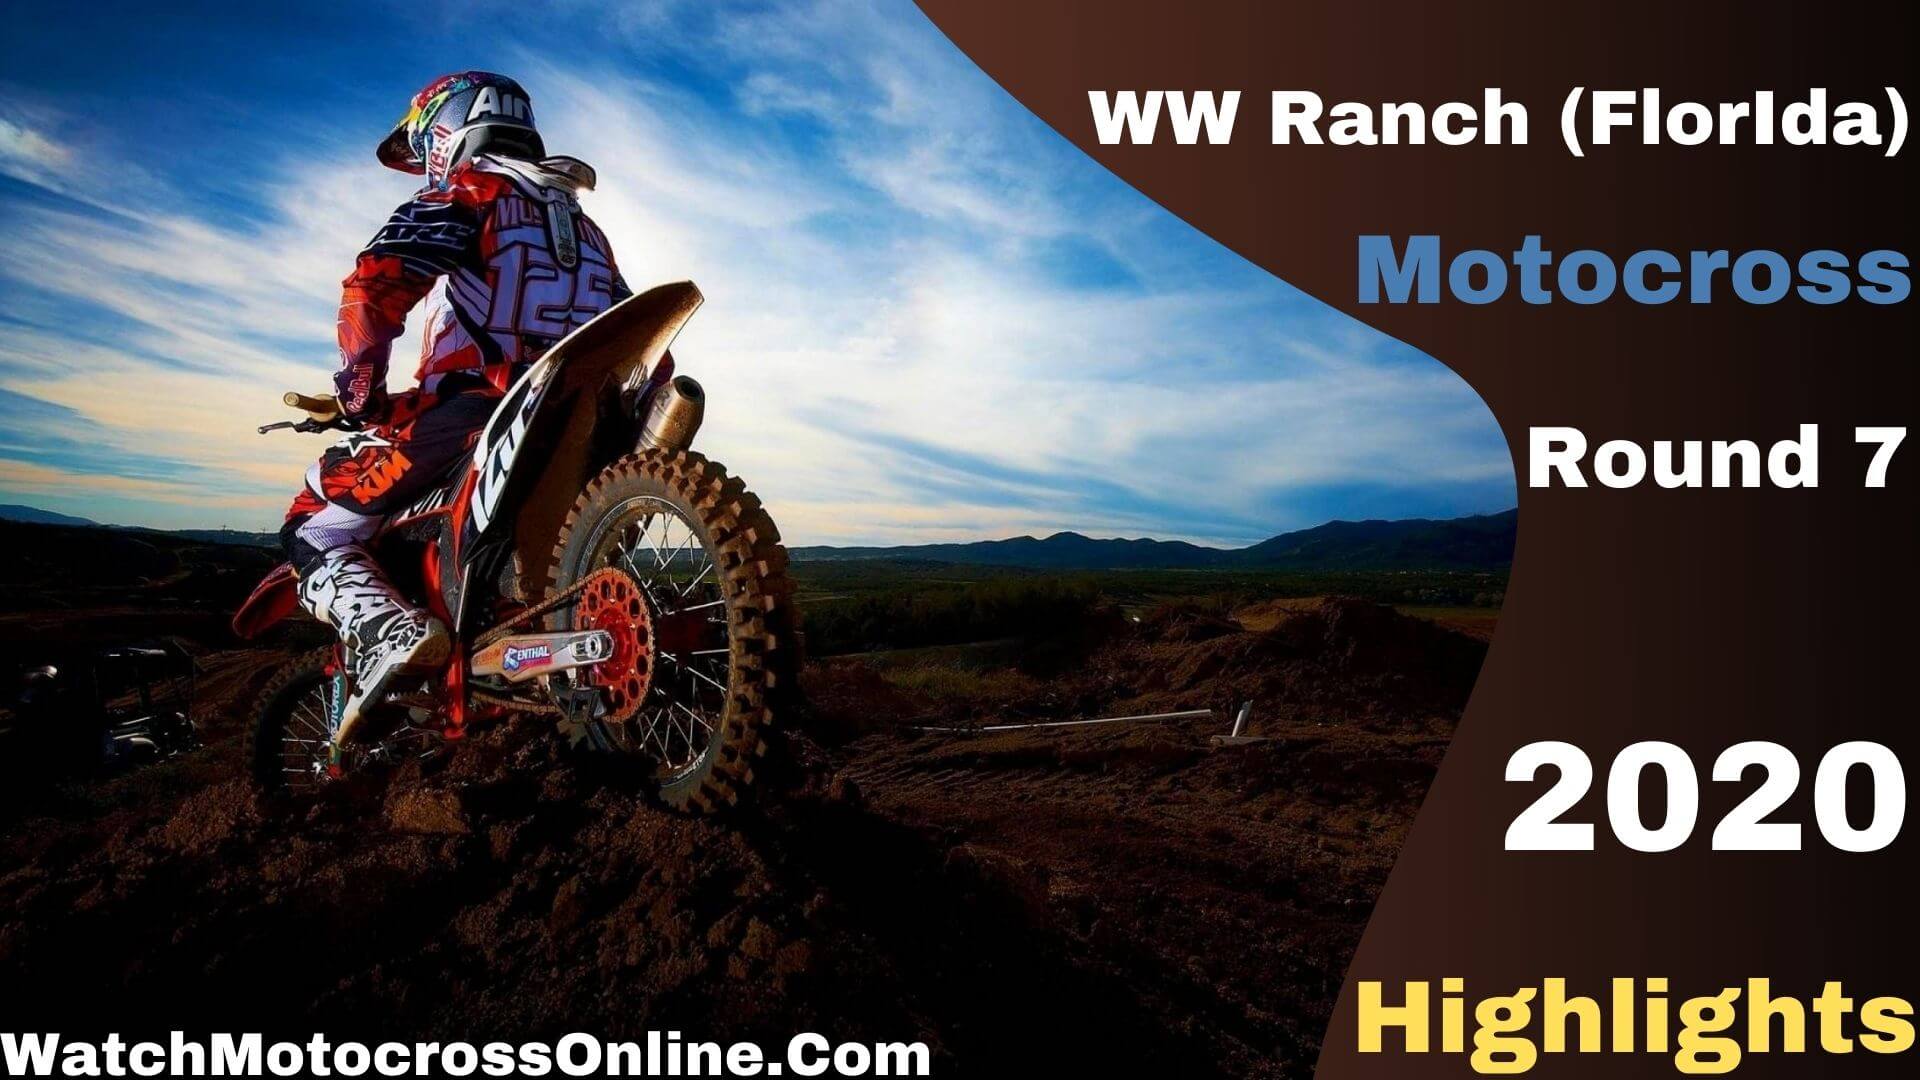 WW Ranch Round 7 Highlights Motocross 2020